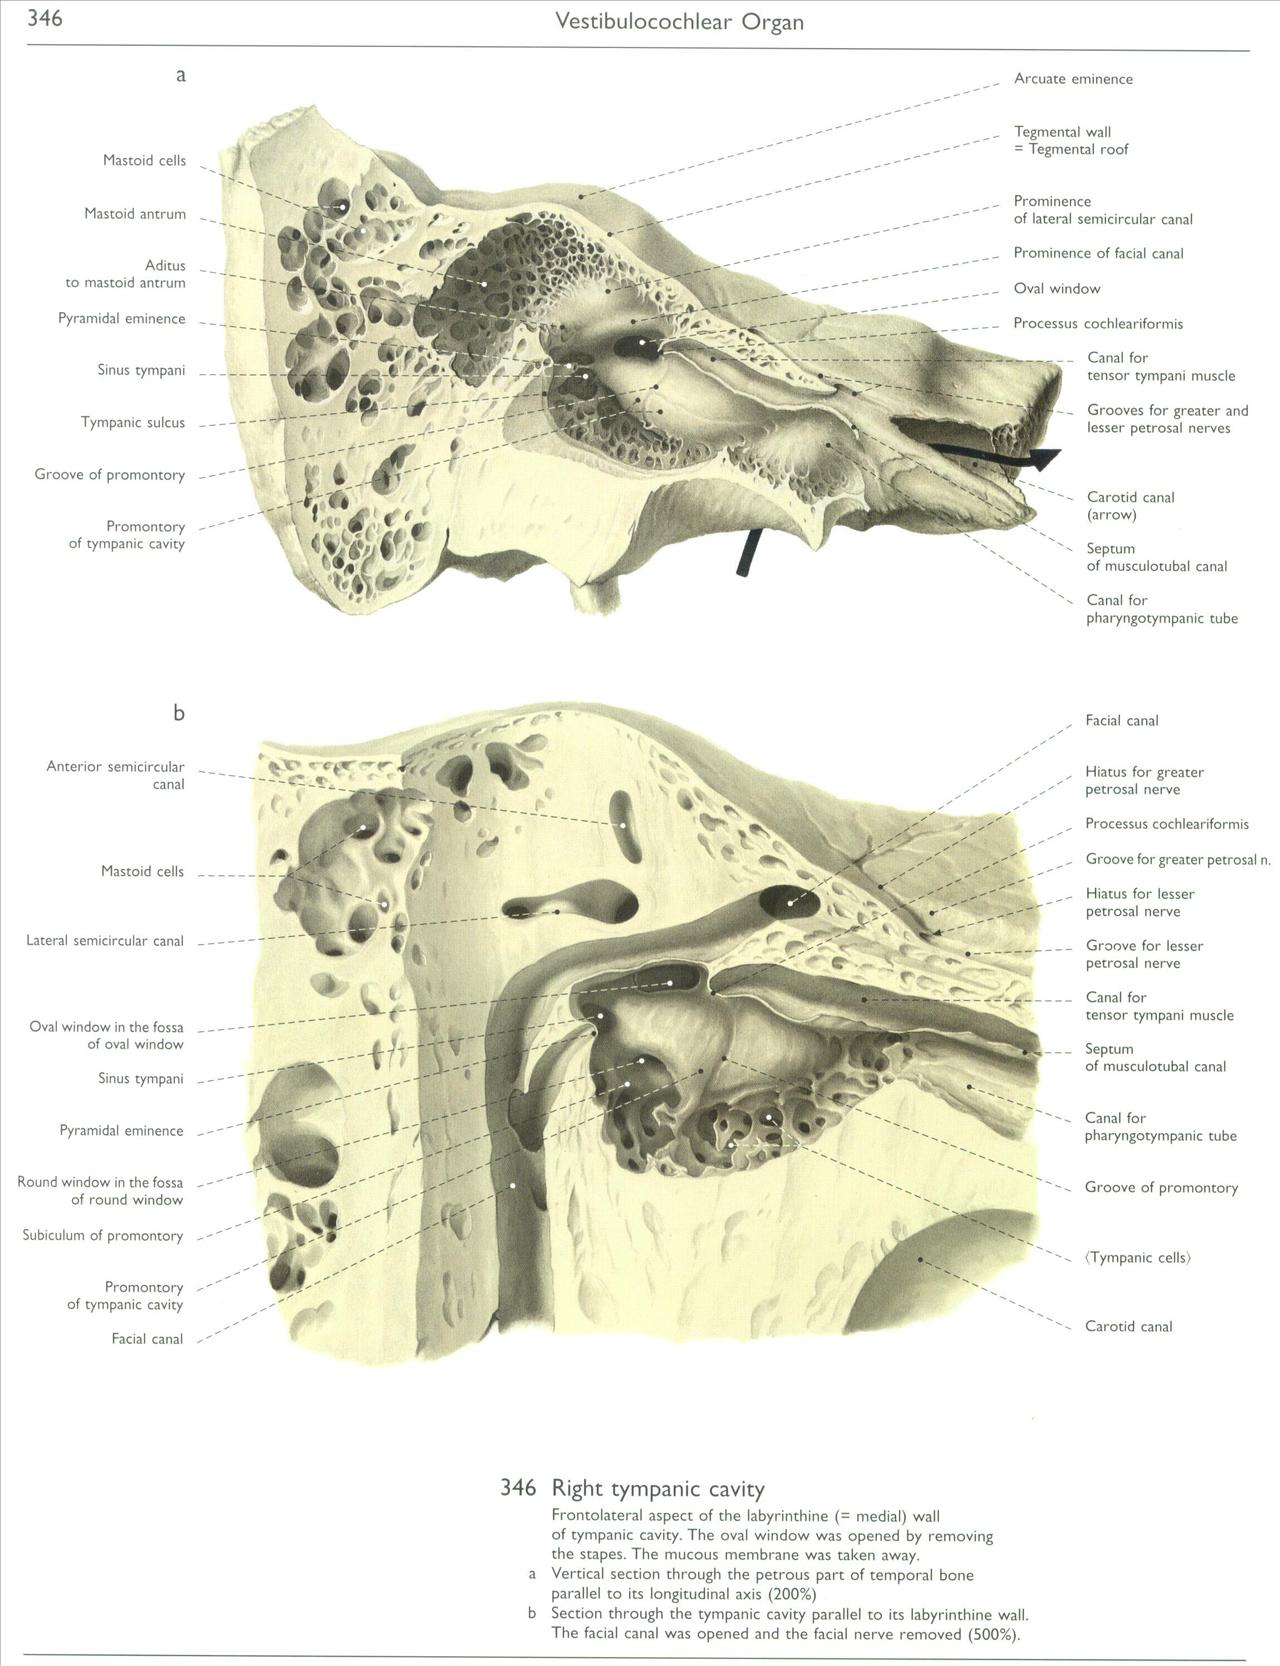 Wolf-Heidegger Color Atlas of Human Anatomy - CNS - 346 - vestibulocochlear organ.jpg